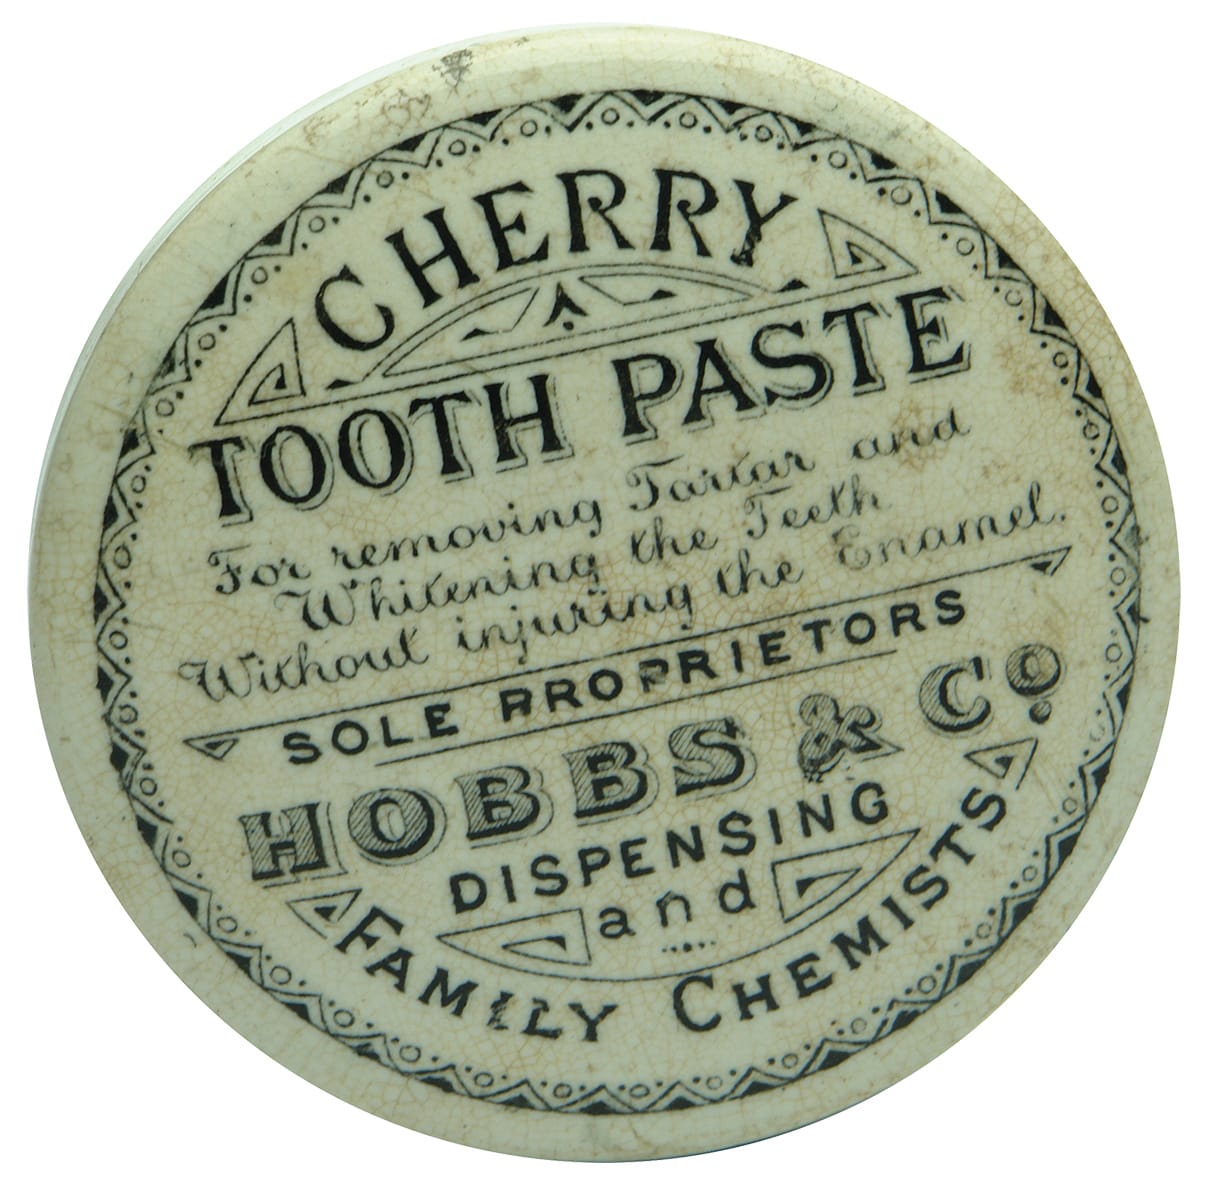 Hobbs Cherry Tooth Paste Family Chemists Pot Lid